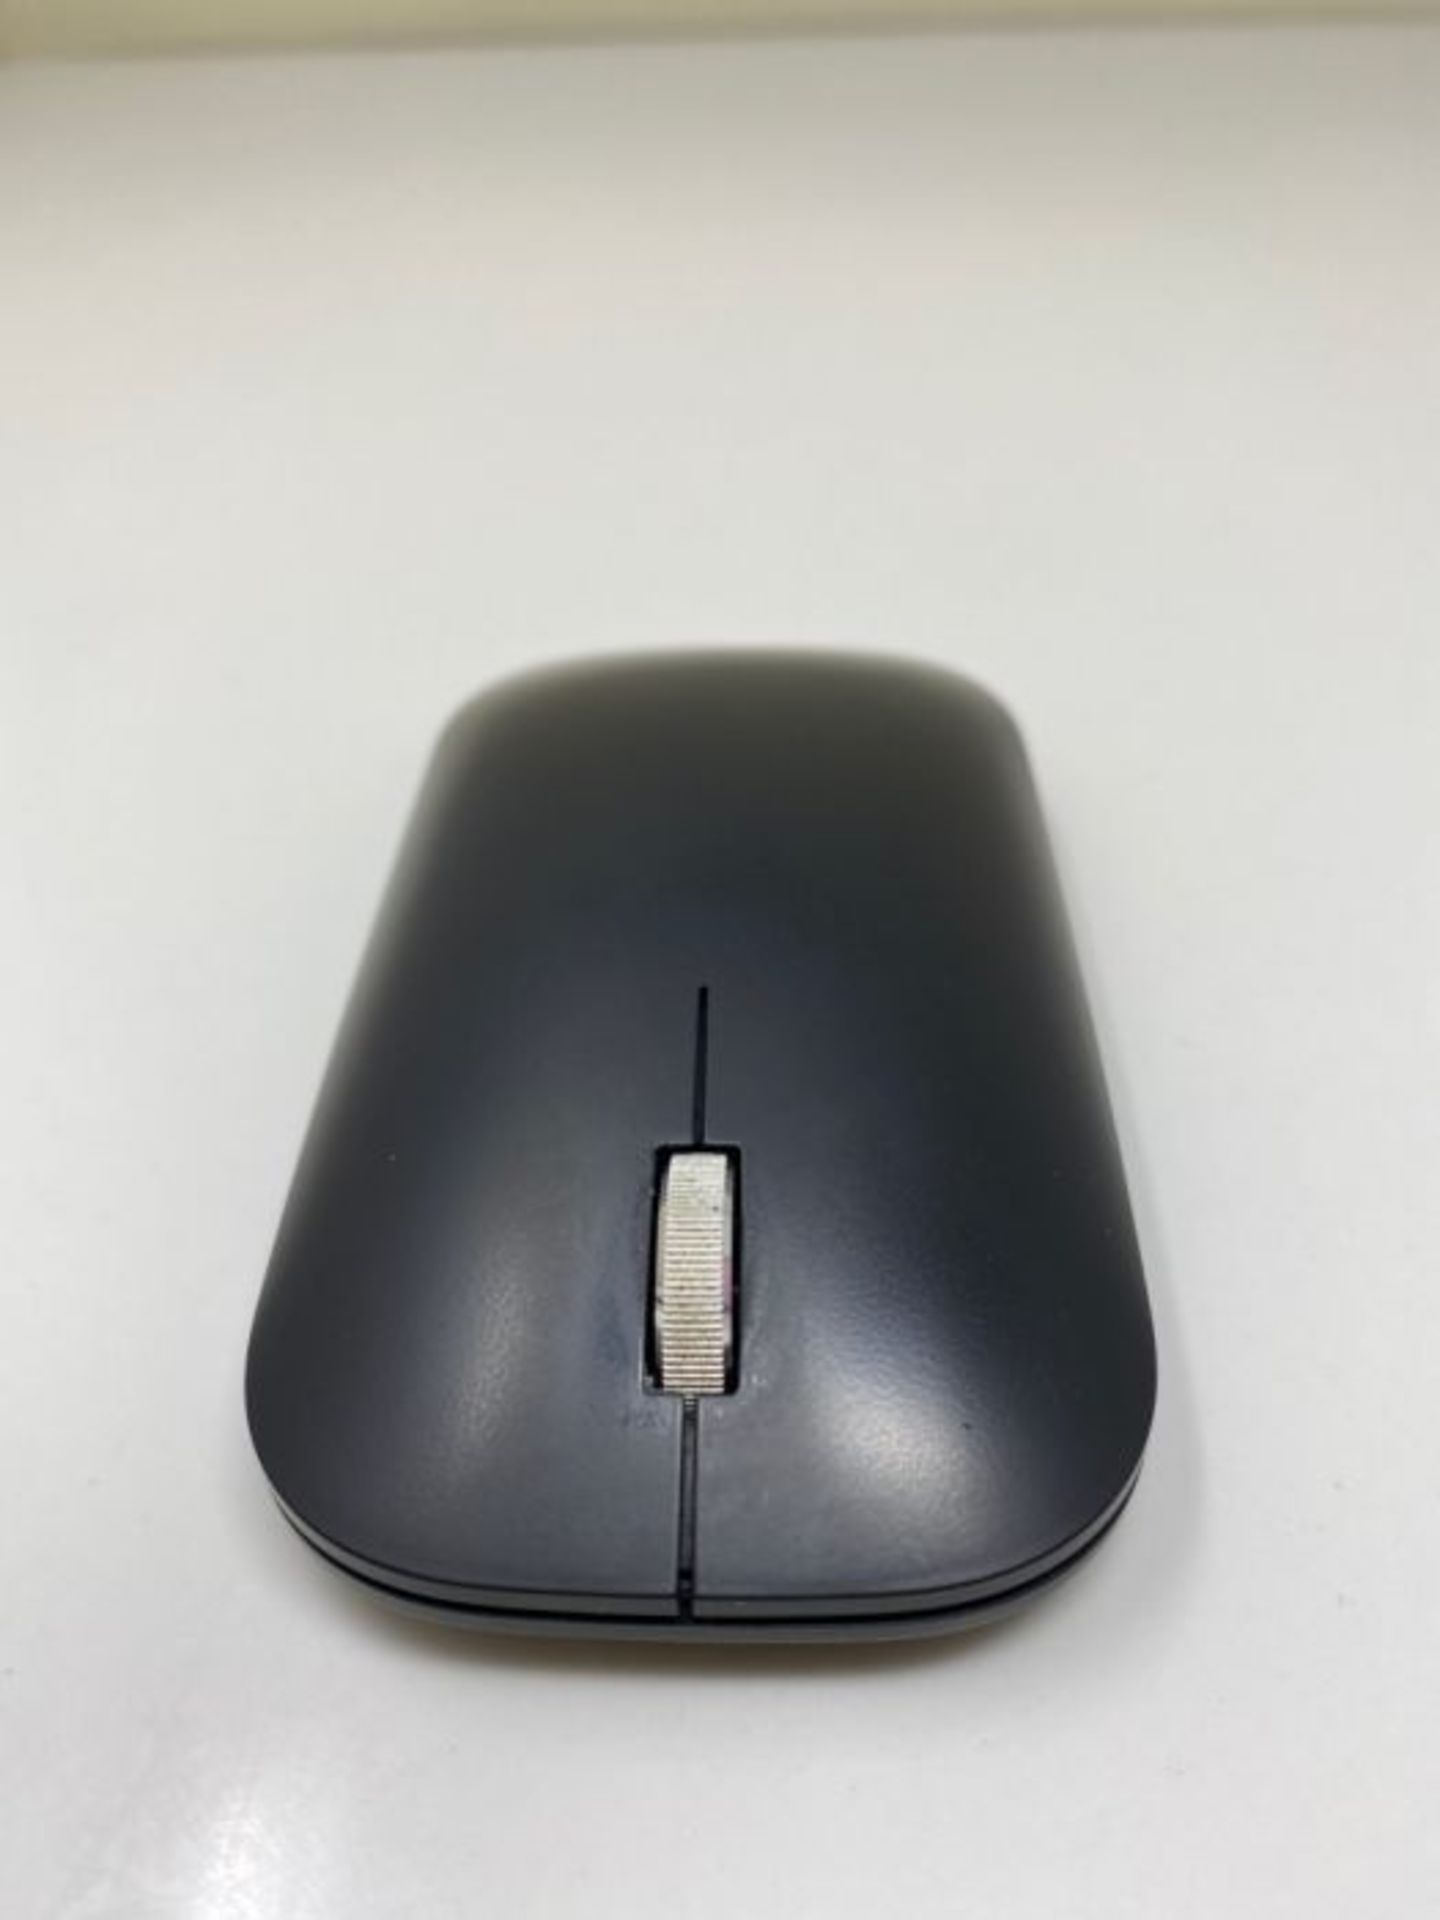 Microsoft KTF-00002 Modern Bluetooth Mouse - Black - Image 2 of 2